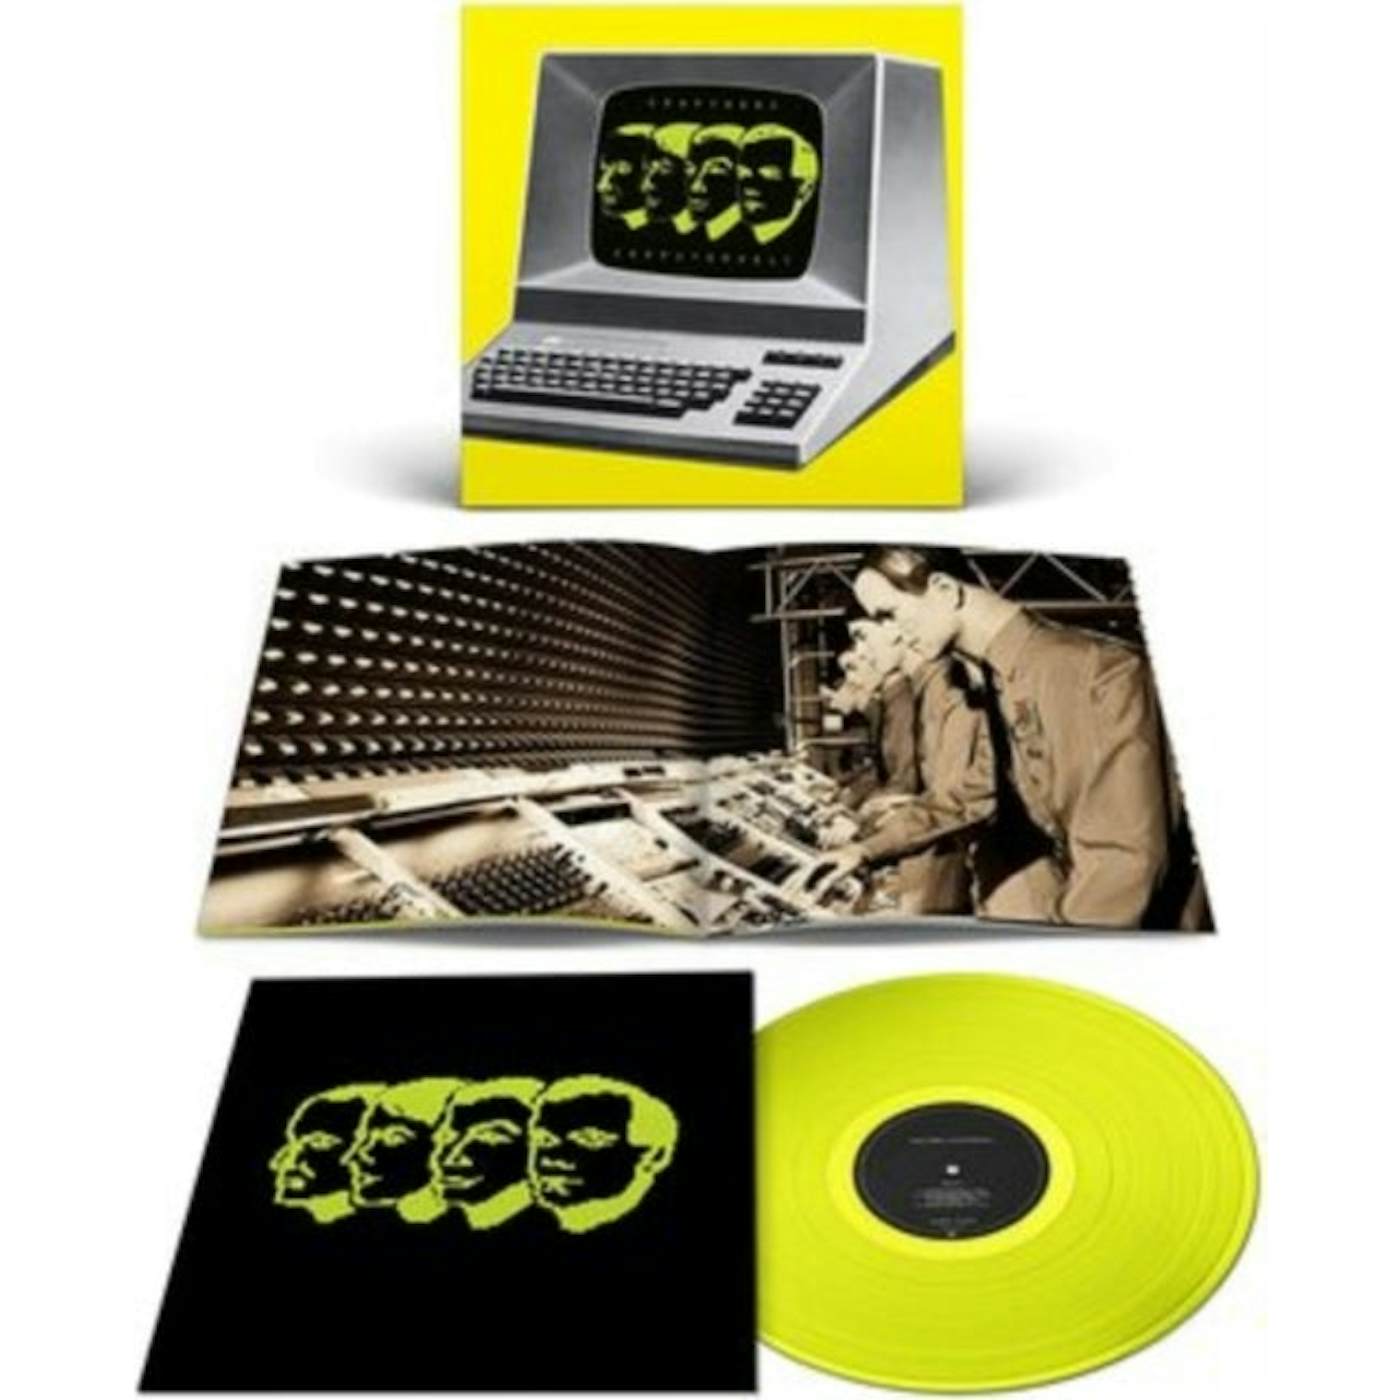 Kraftwerk LP Vinyl Record - Computerwelt (German Version) (Coloured Vinyl)